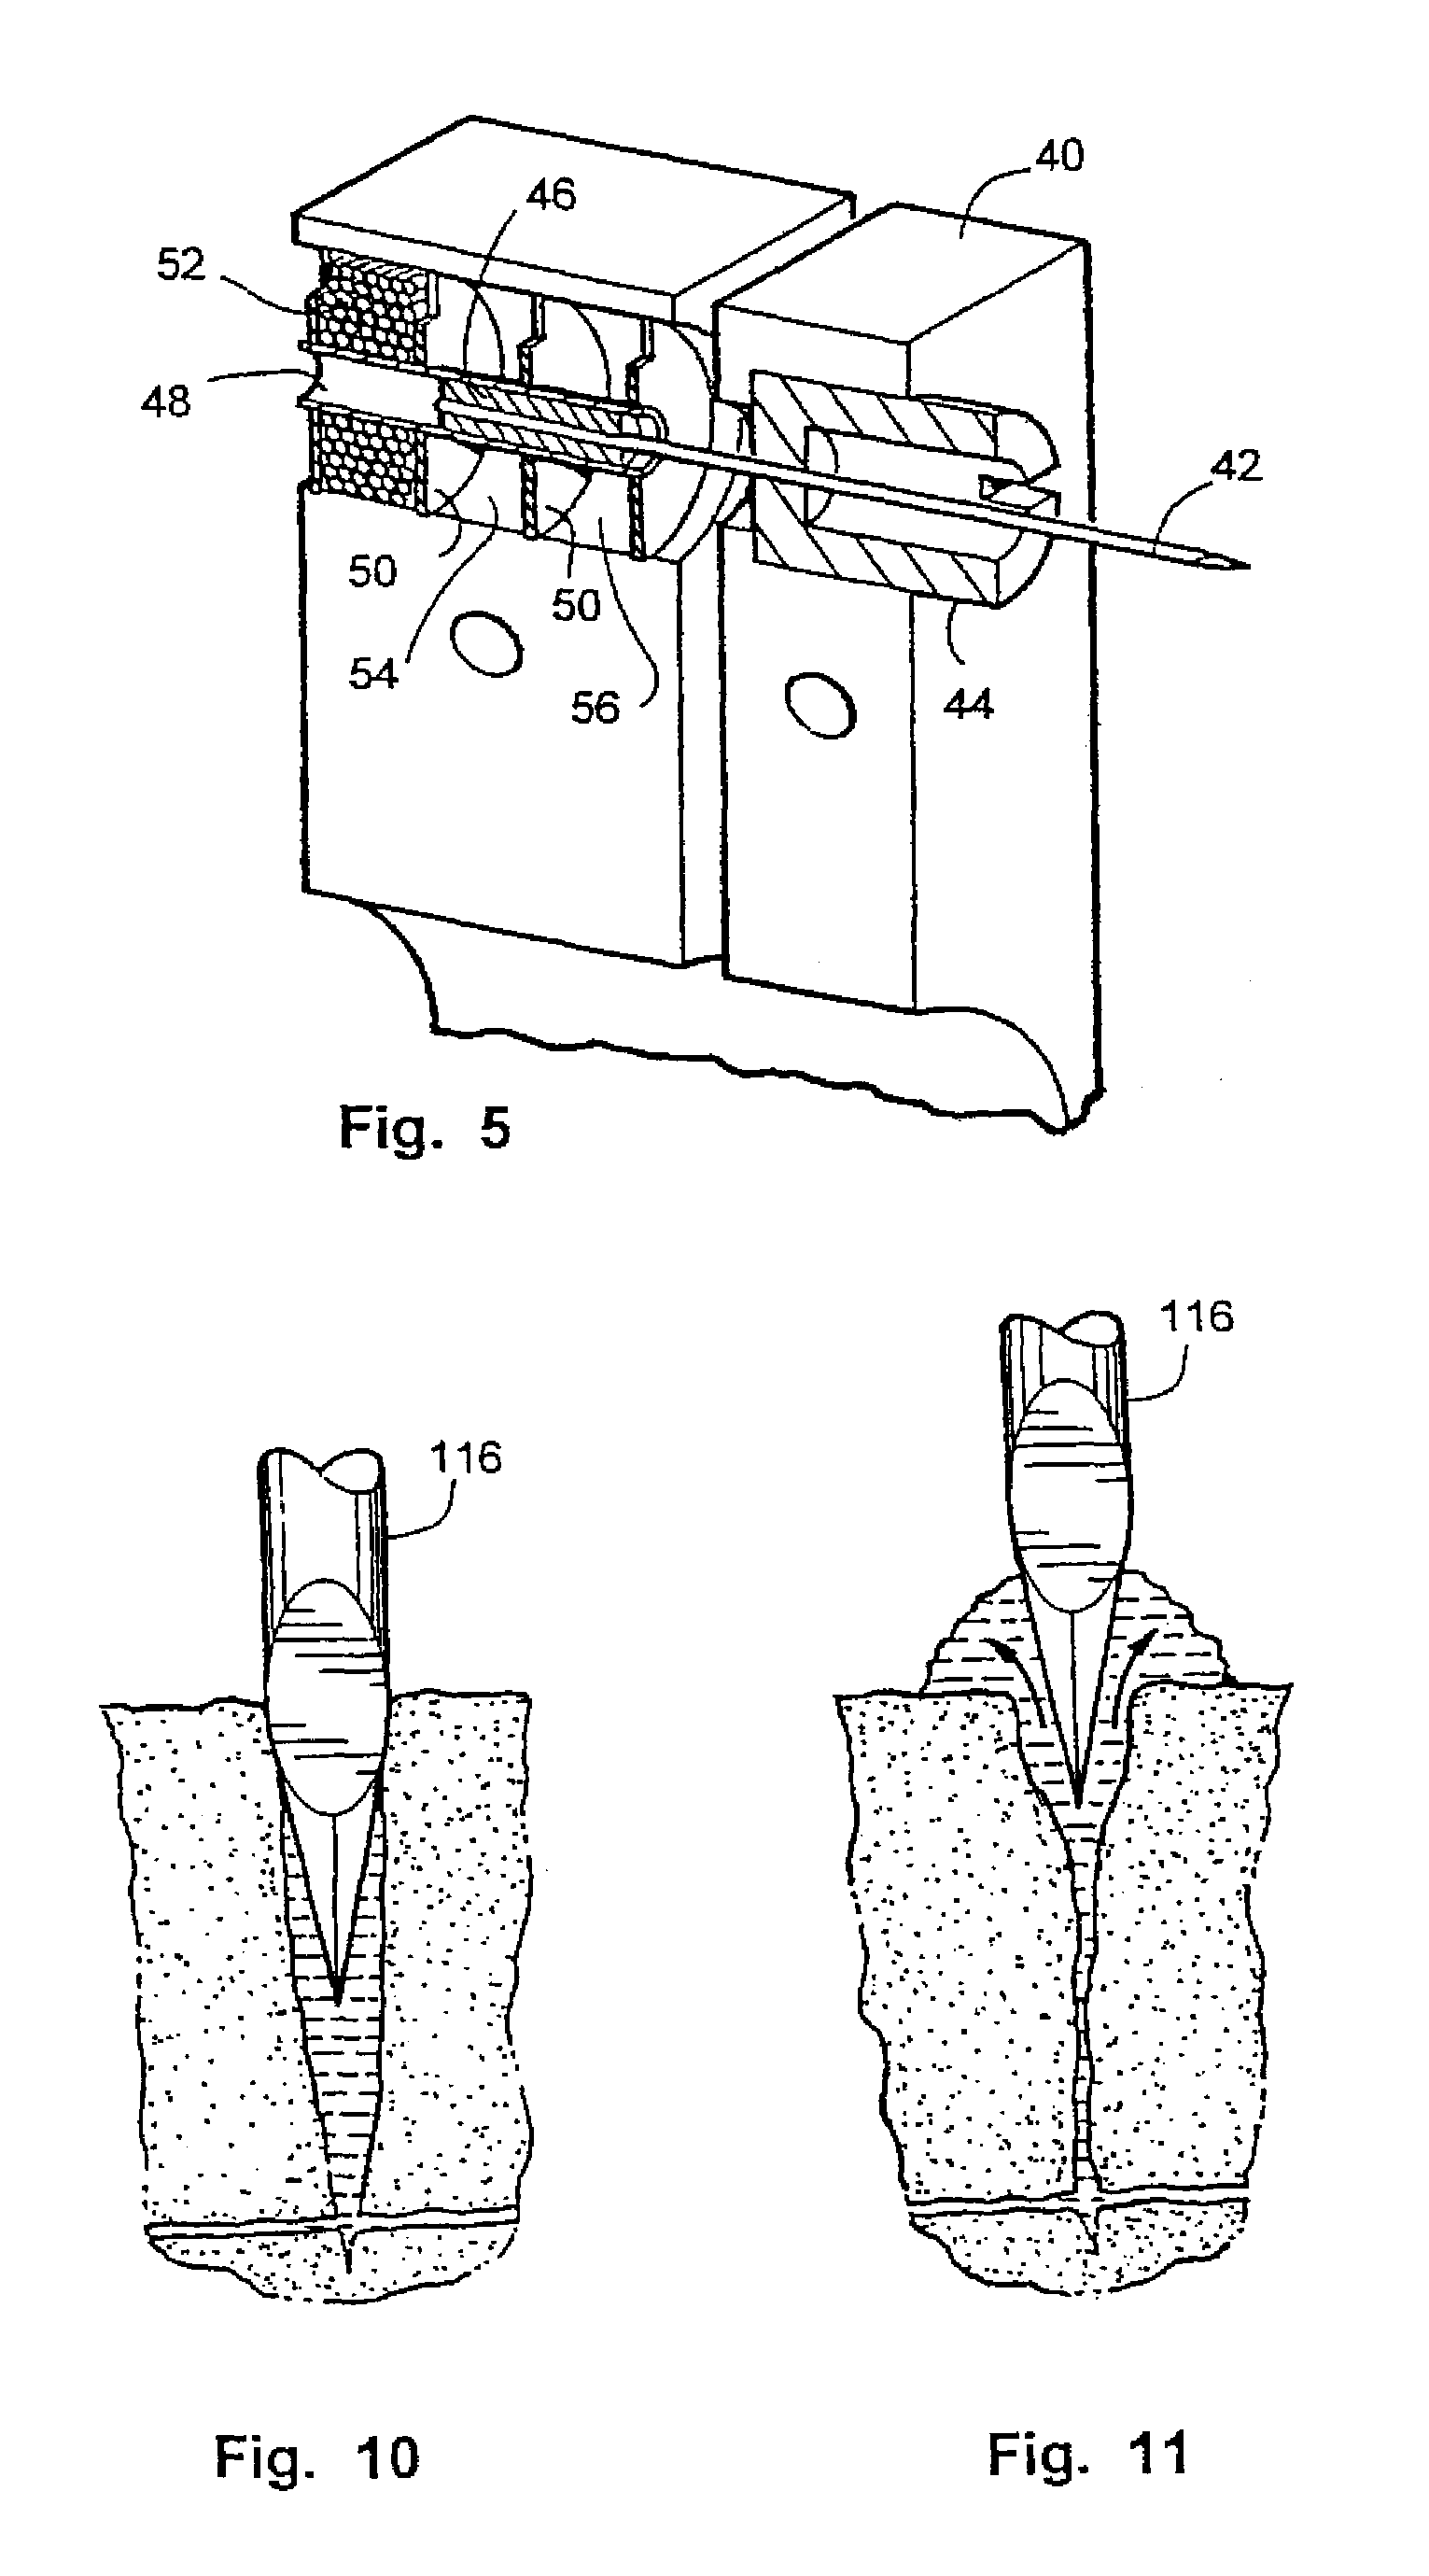 Tissue penetration device